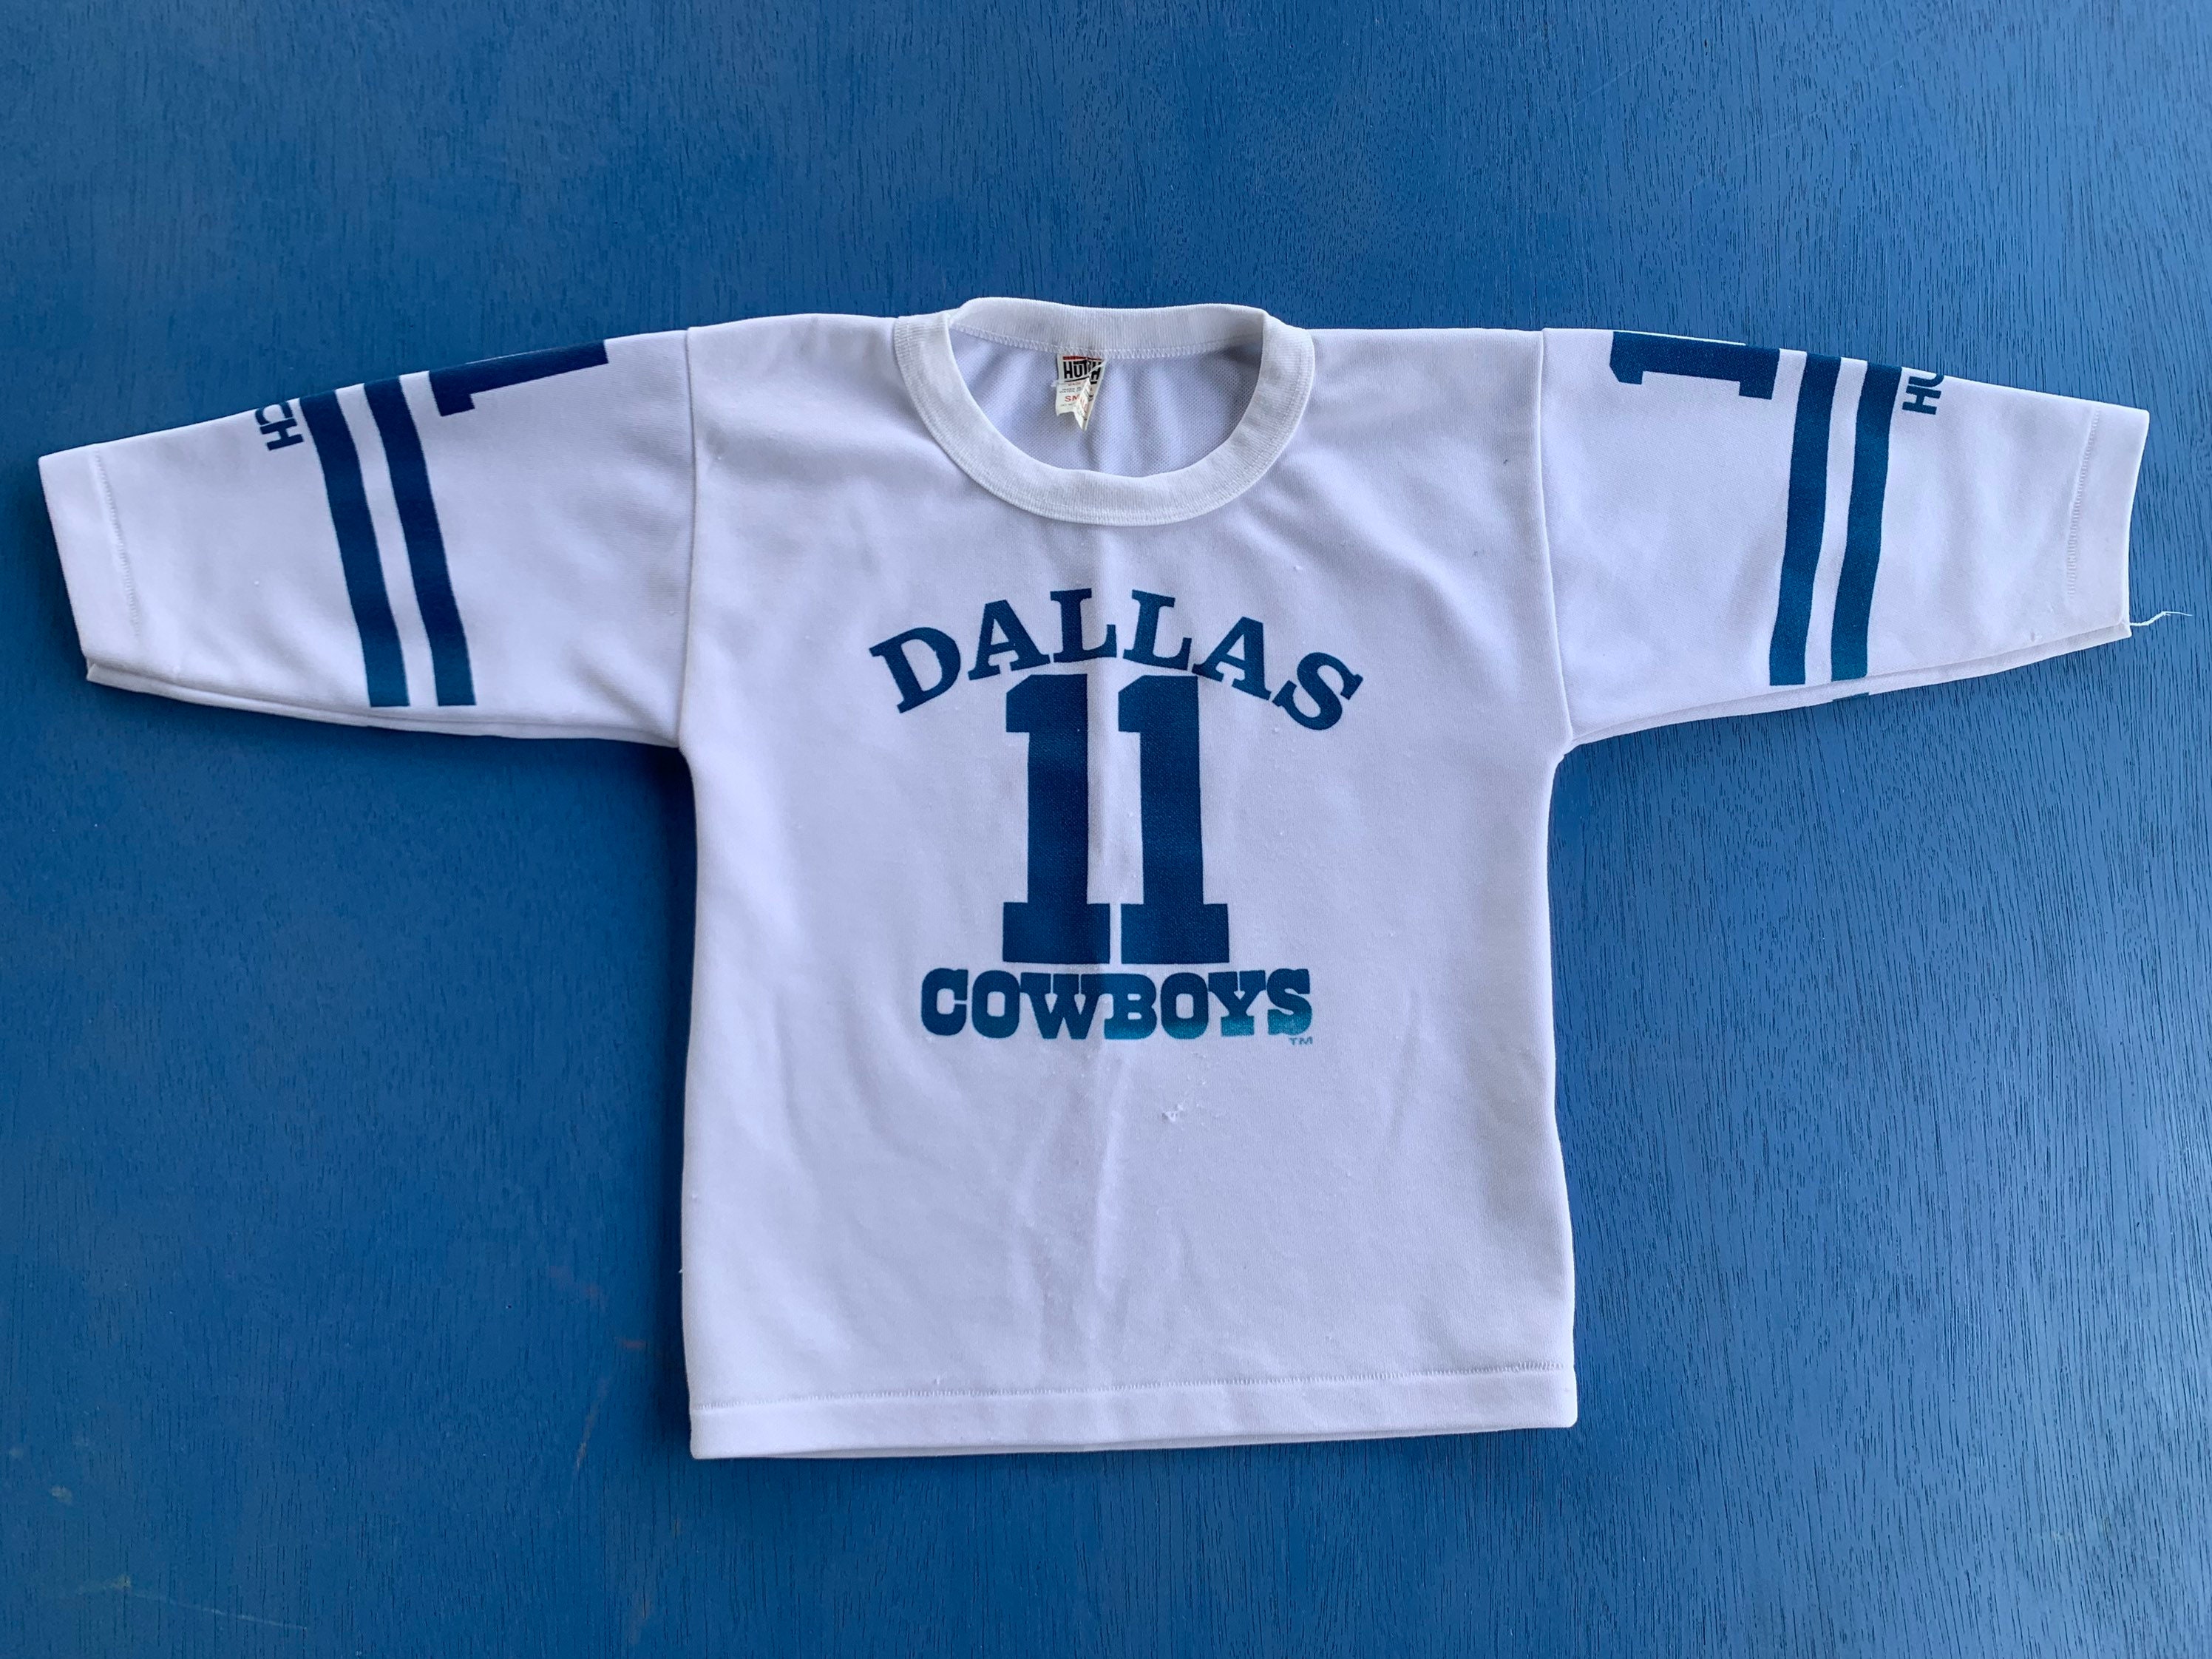 11 cowboys jersey